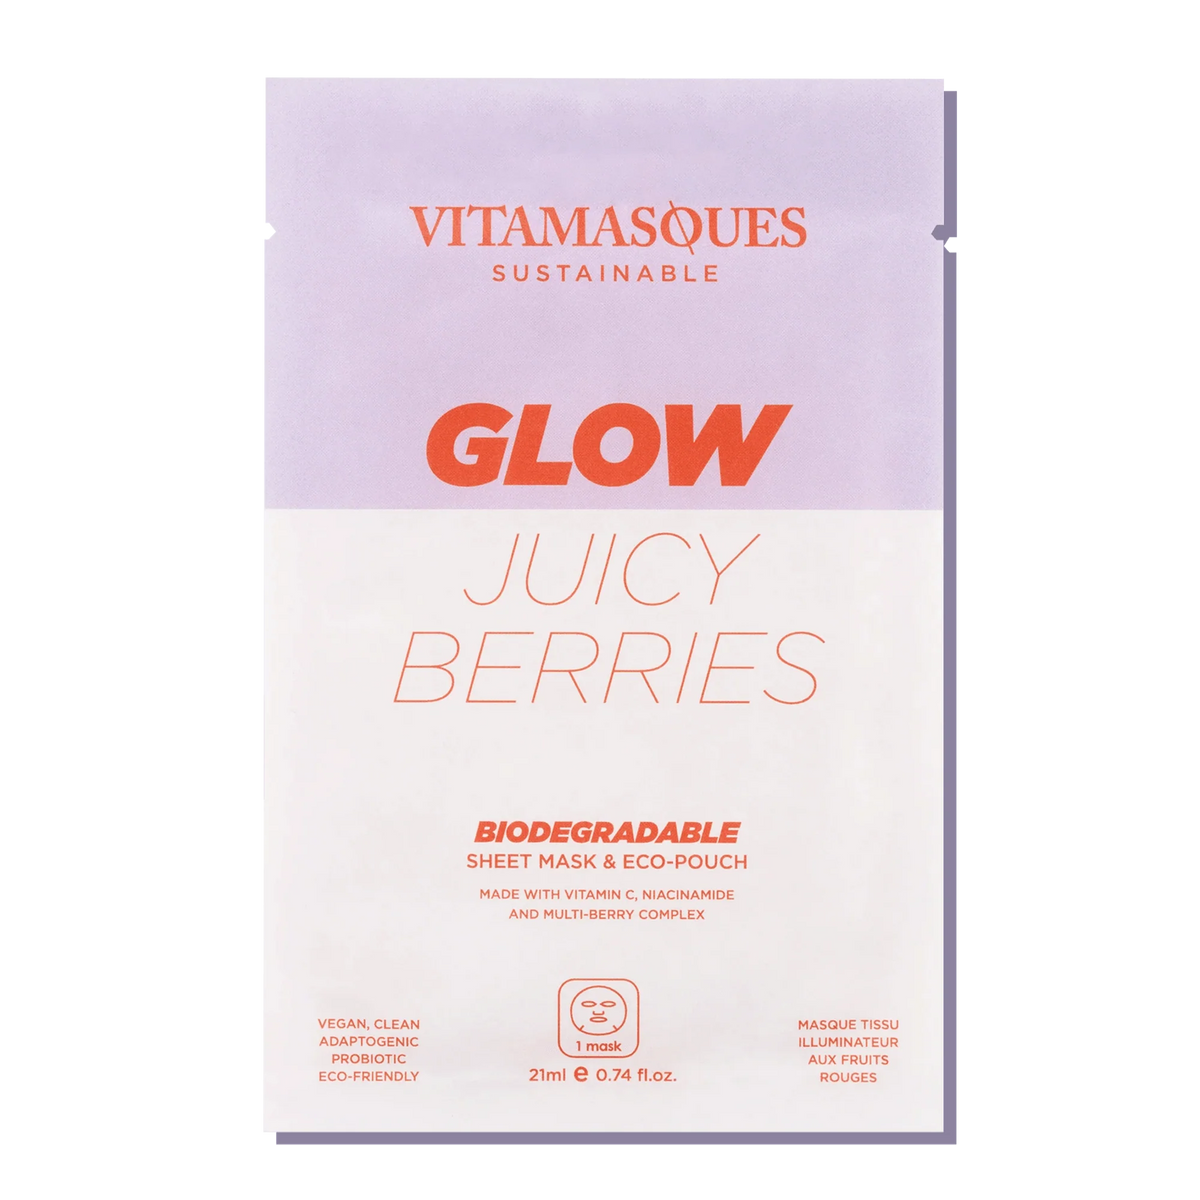 Glow Juicy Berries Biodegradable Face Sheet Mask